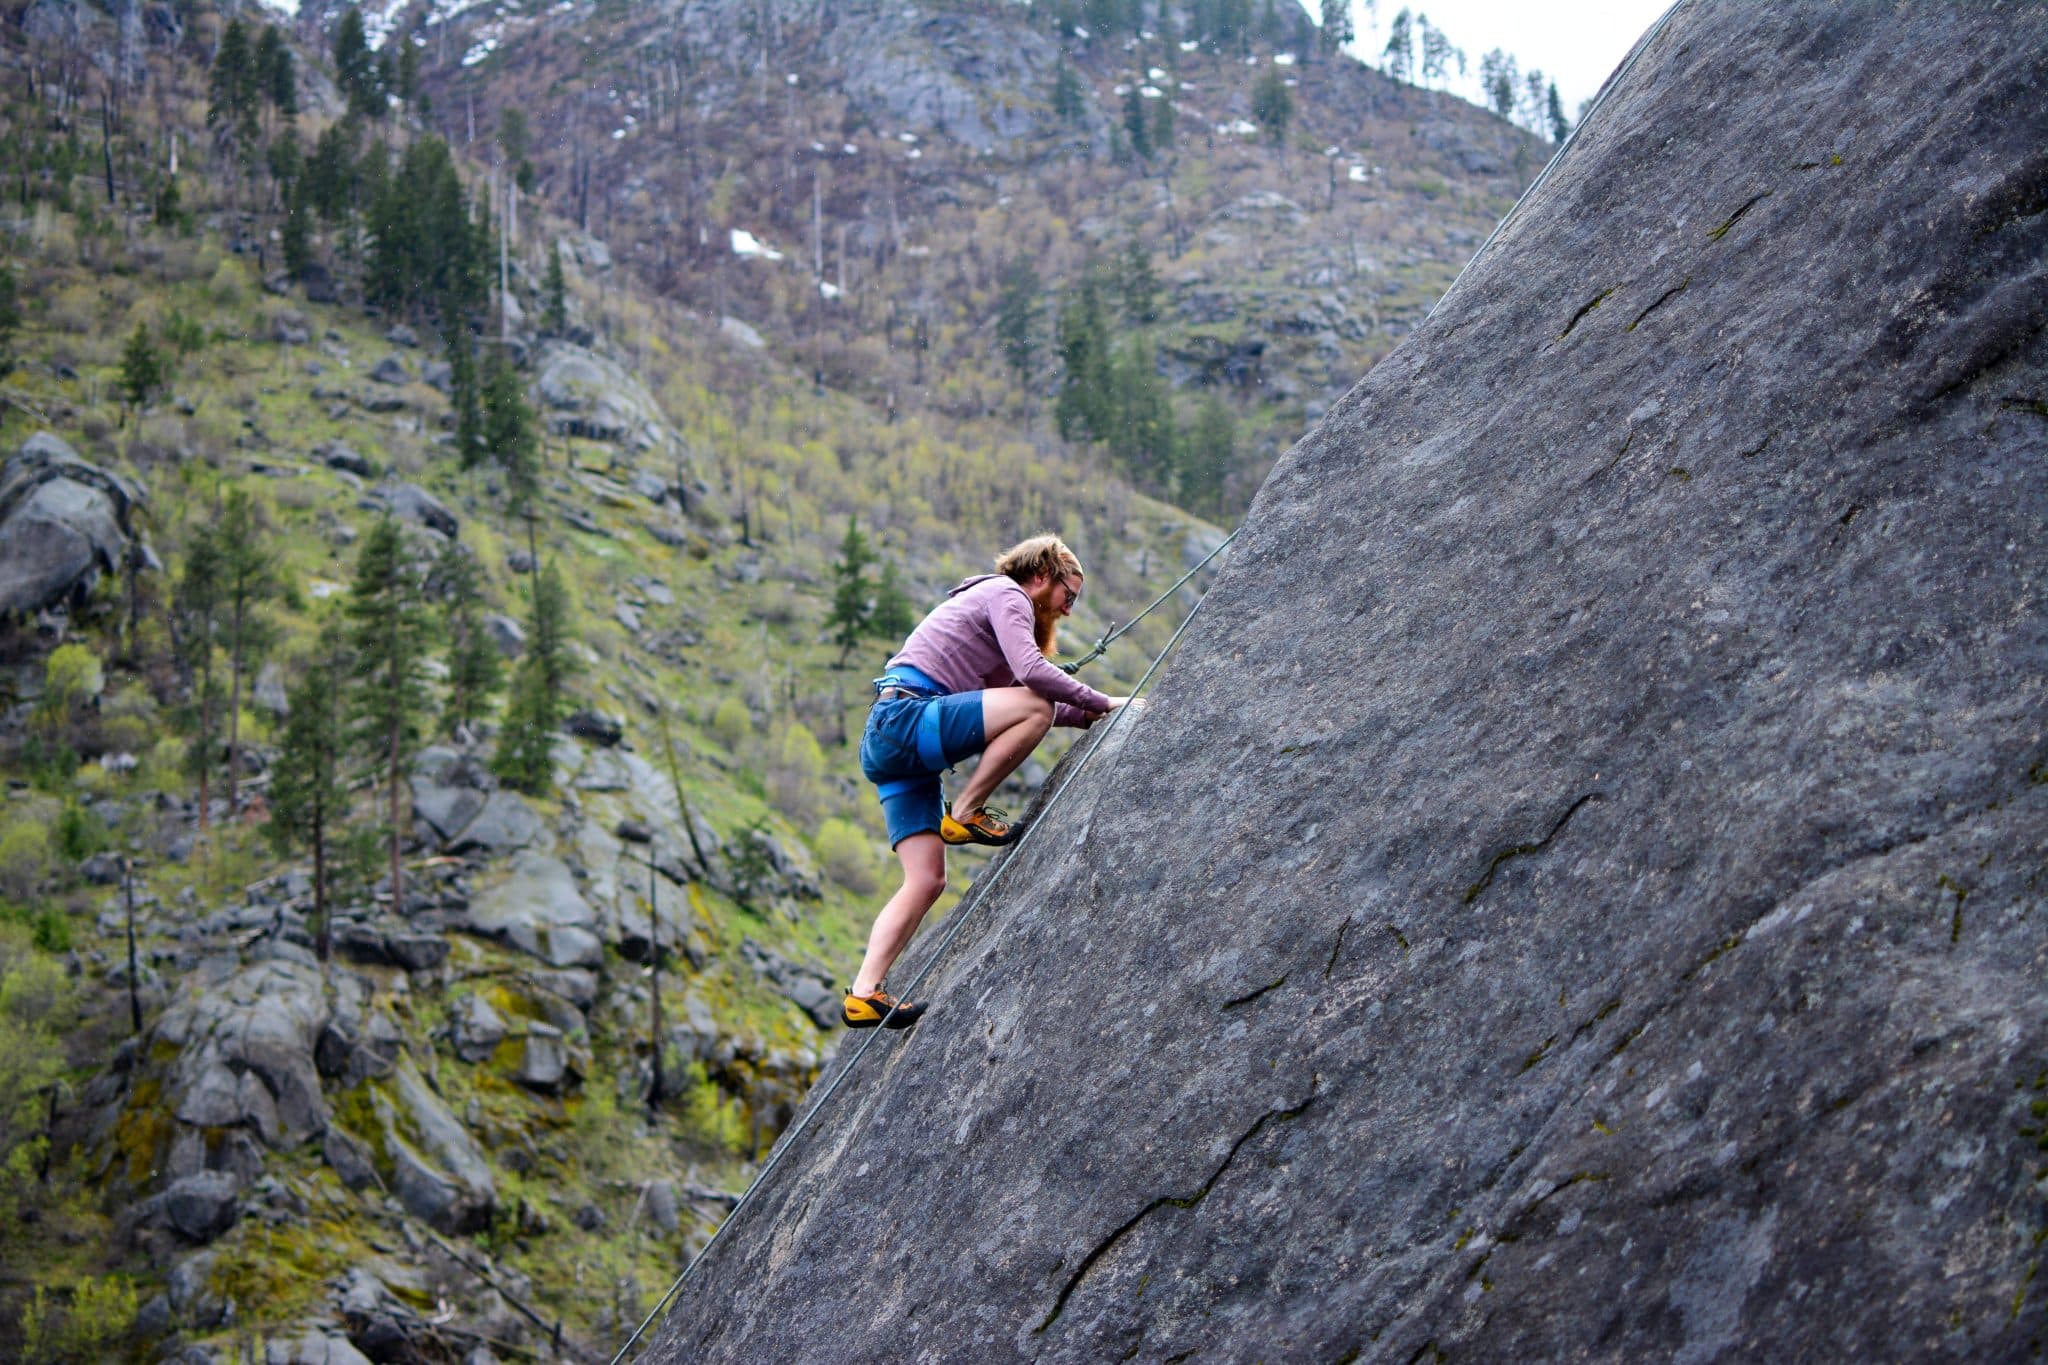 The Wet Mountains: Southern Colorado’s Hidden Rock Climbing Gem